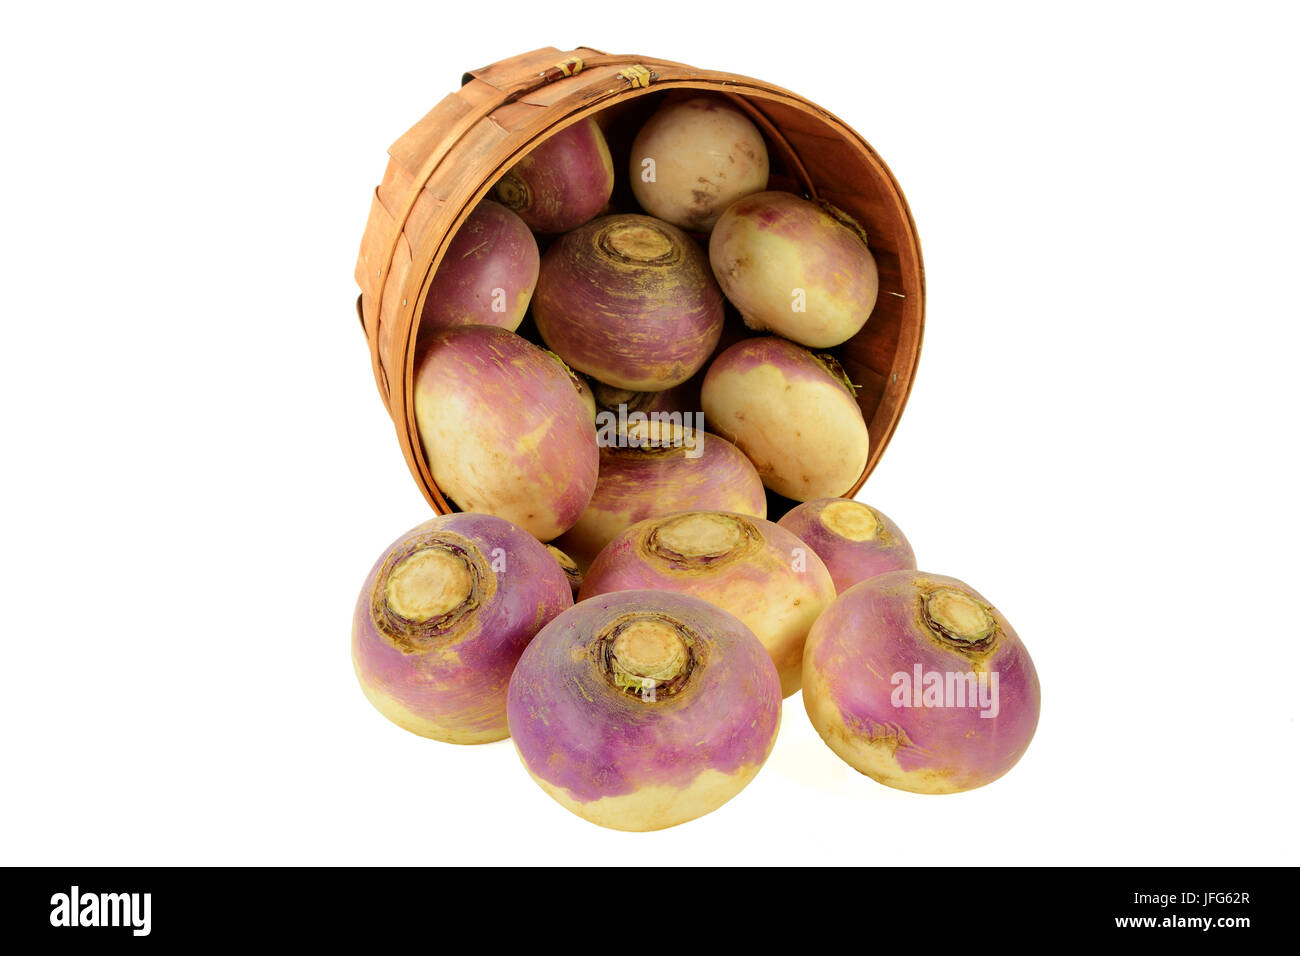 Vegetable Turnip roots Stock Photo